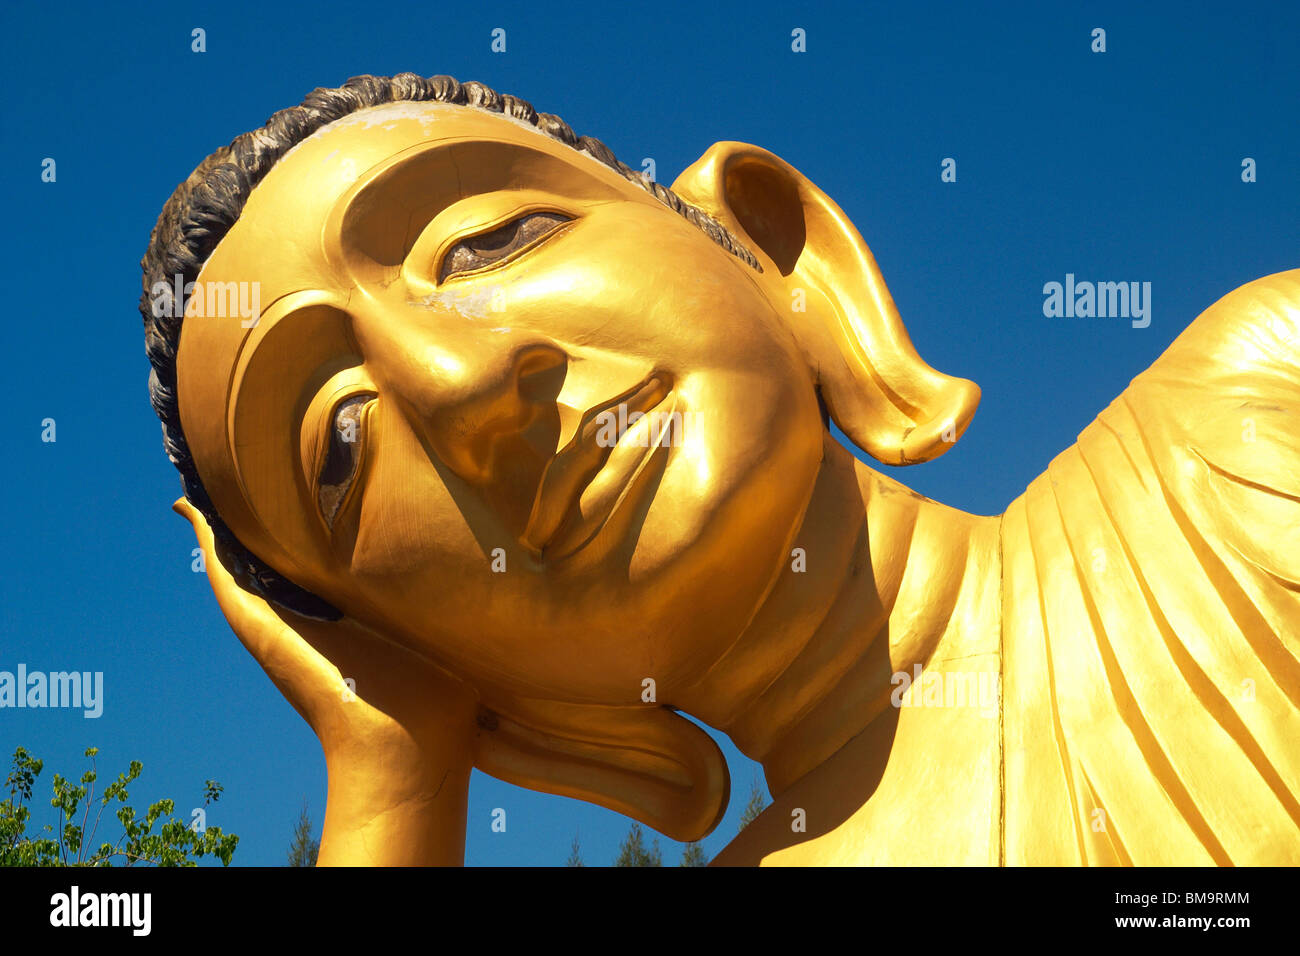 Head of a large gold reclining Buddha at Wat Sri Sunthon, a Buddhist temple on the island of Phuket Stock Photo